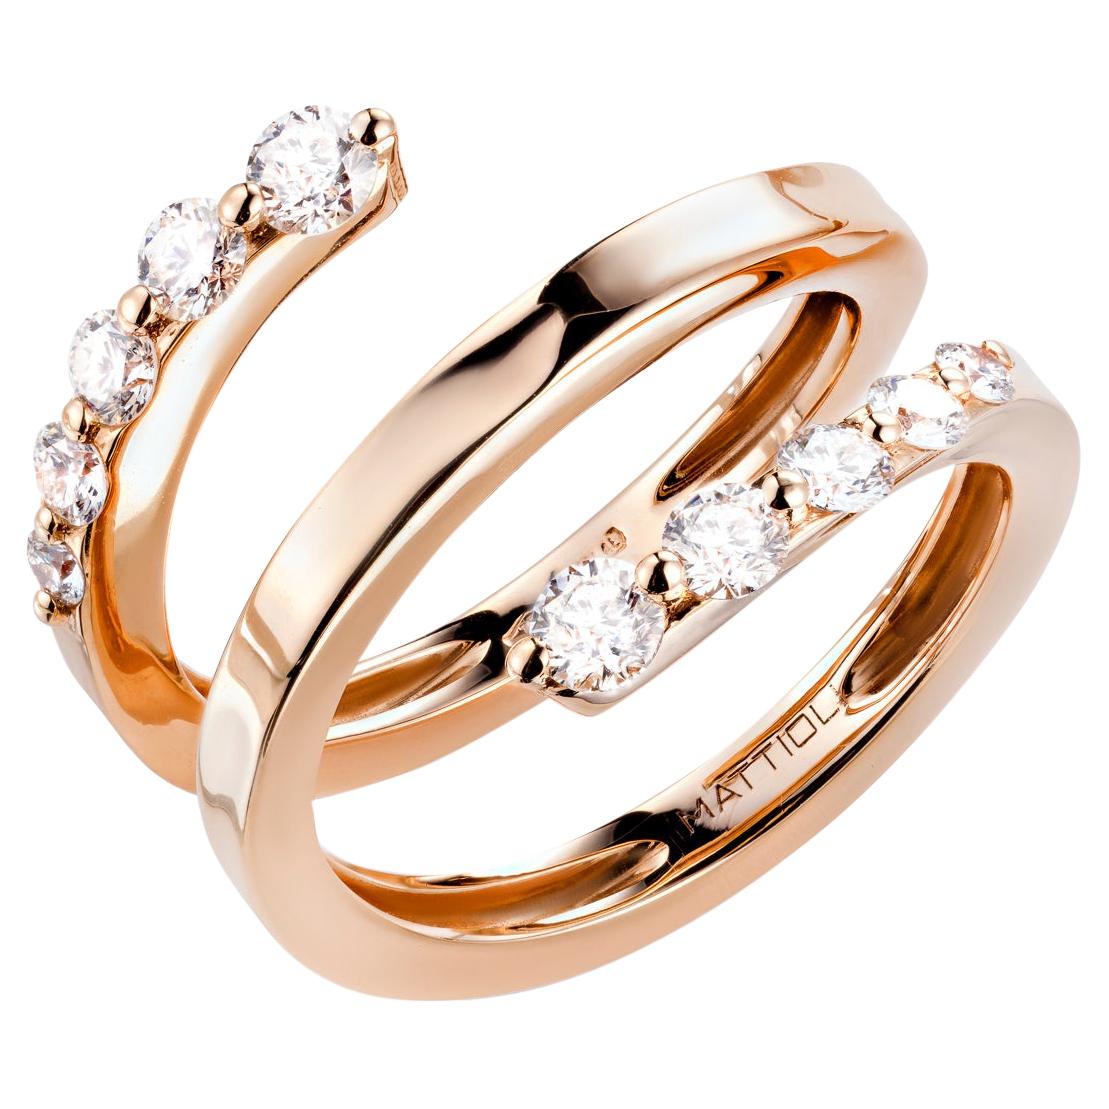 Mattioli Aspis Spiral Ring in Rose Gold and White Diamonds